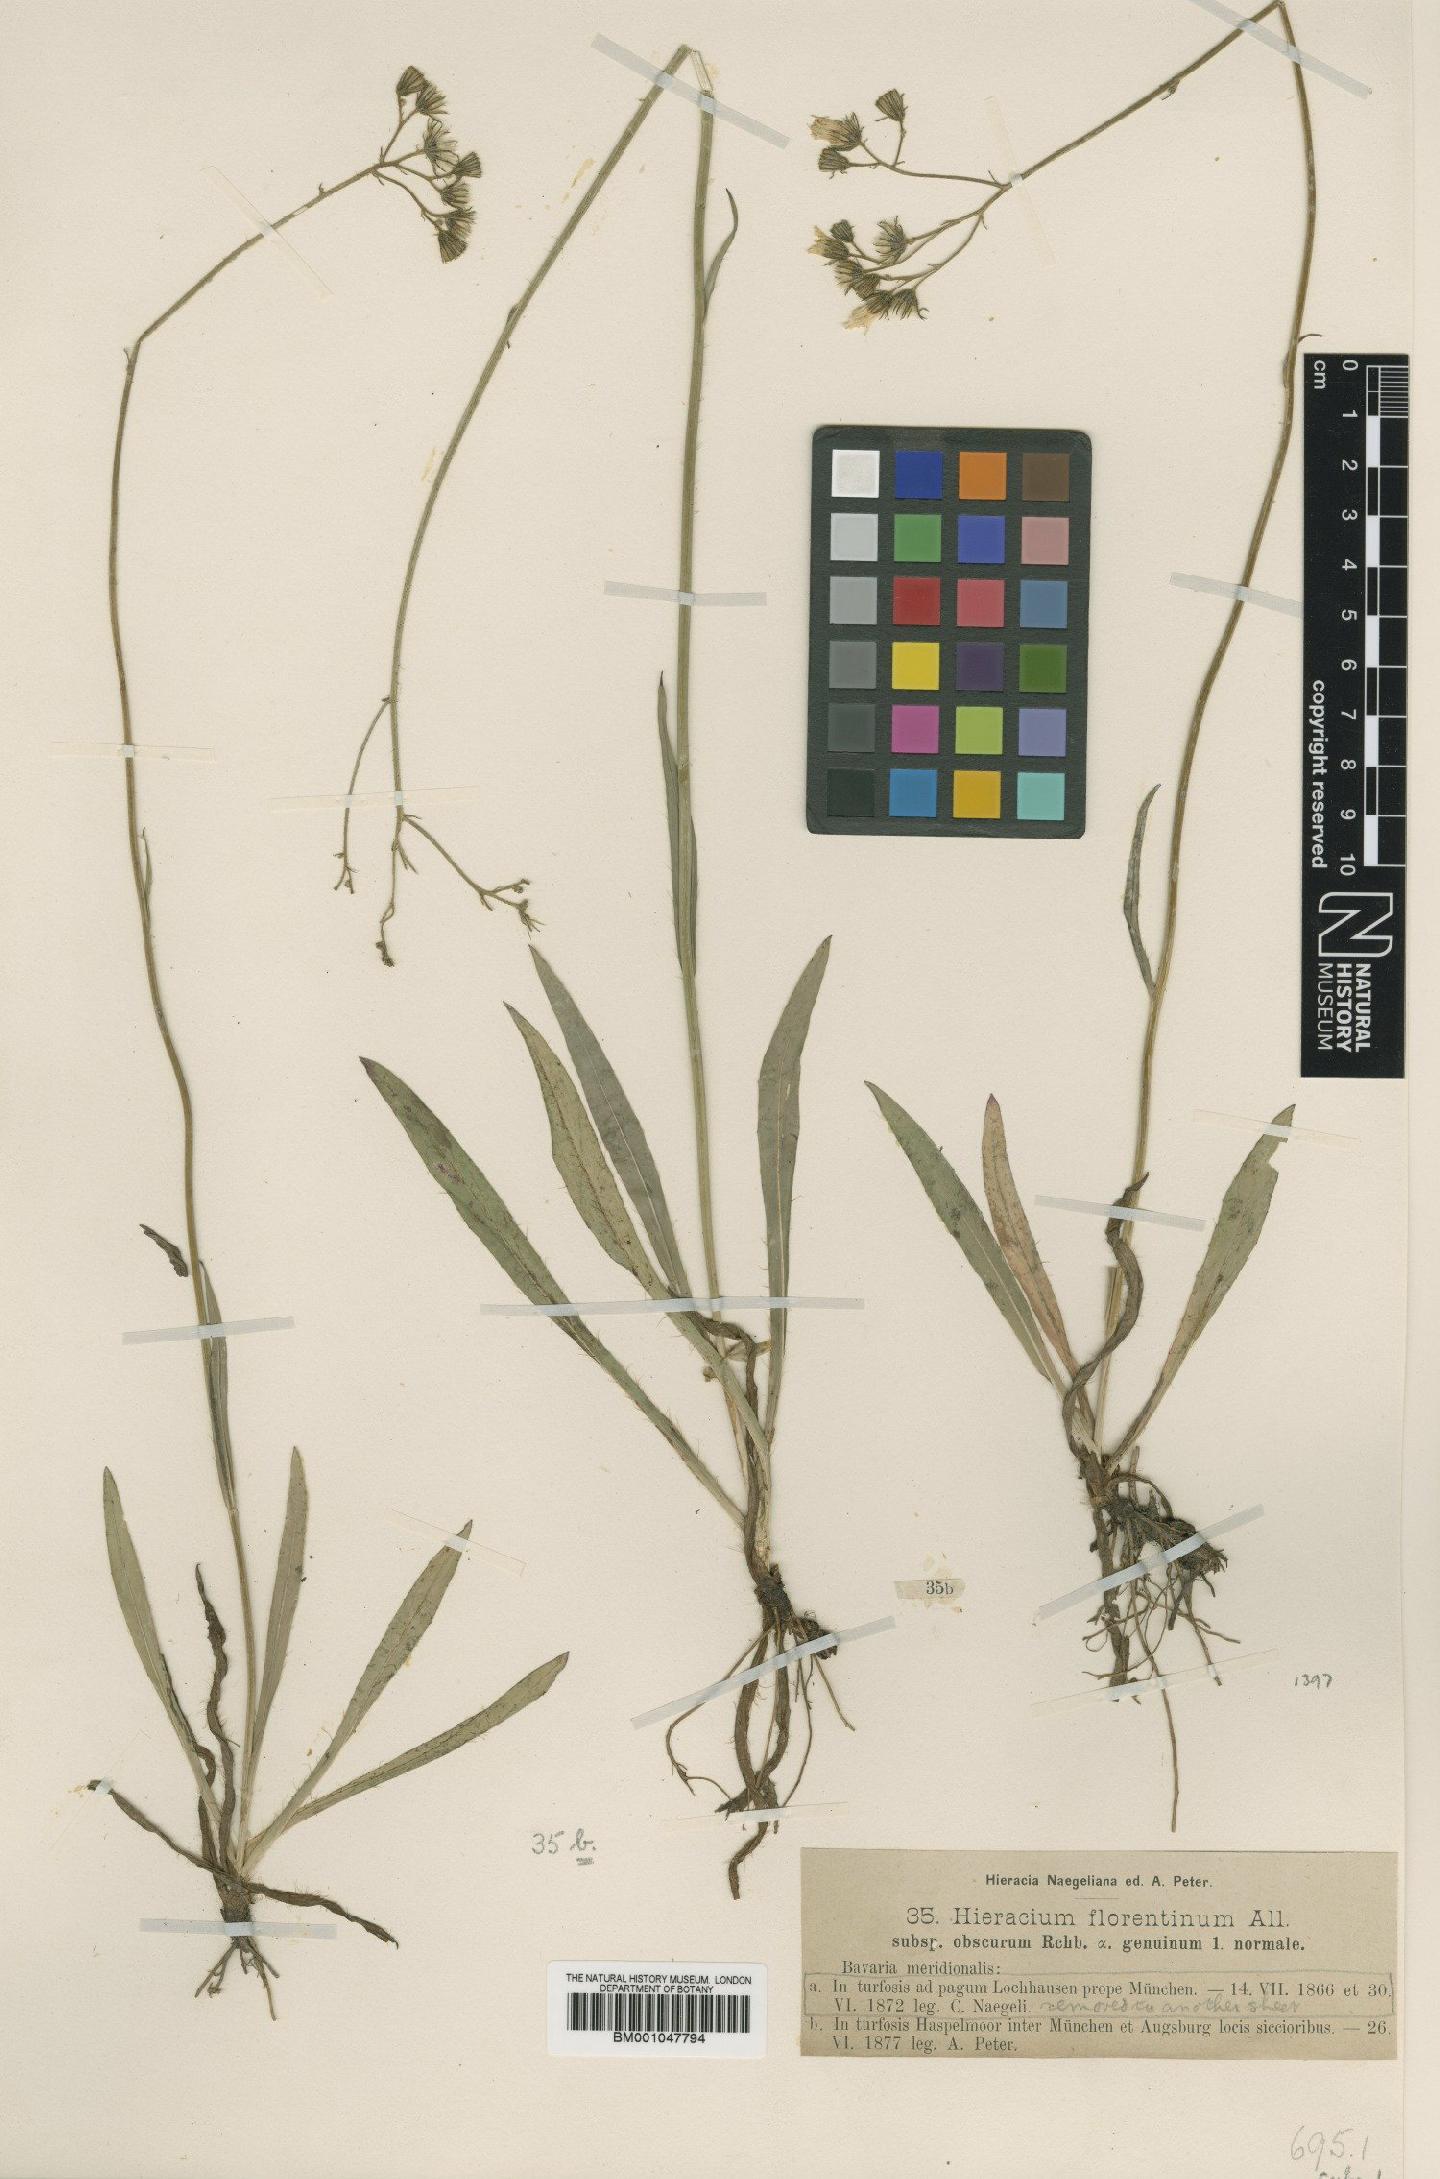 To NHMUK collection (Hieracium florentinum subsp. obscurum Rchb.; NHMUK:ecatalogue:2816023)